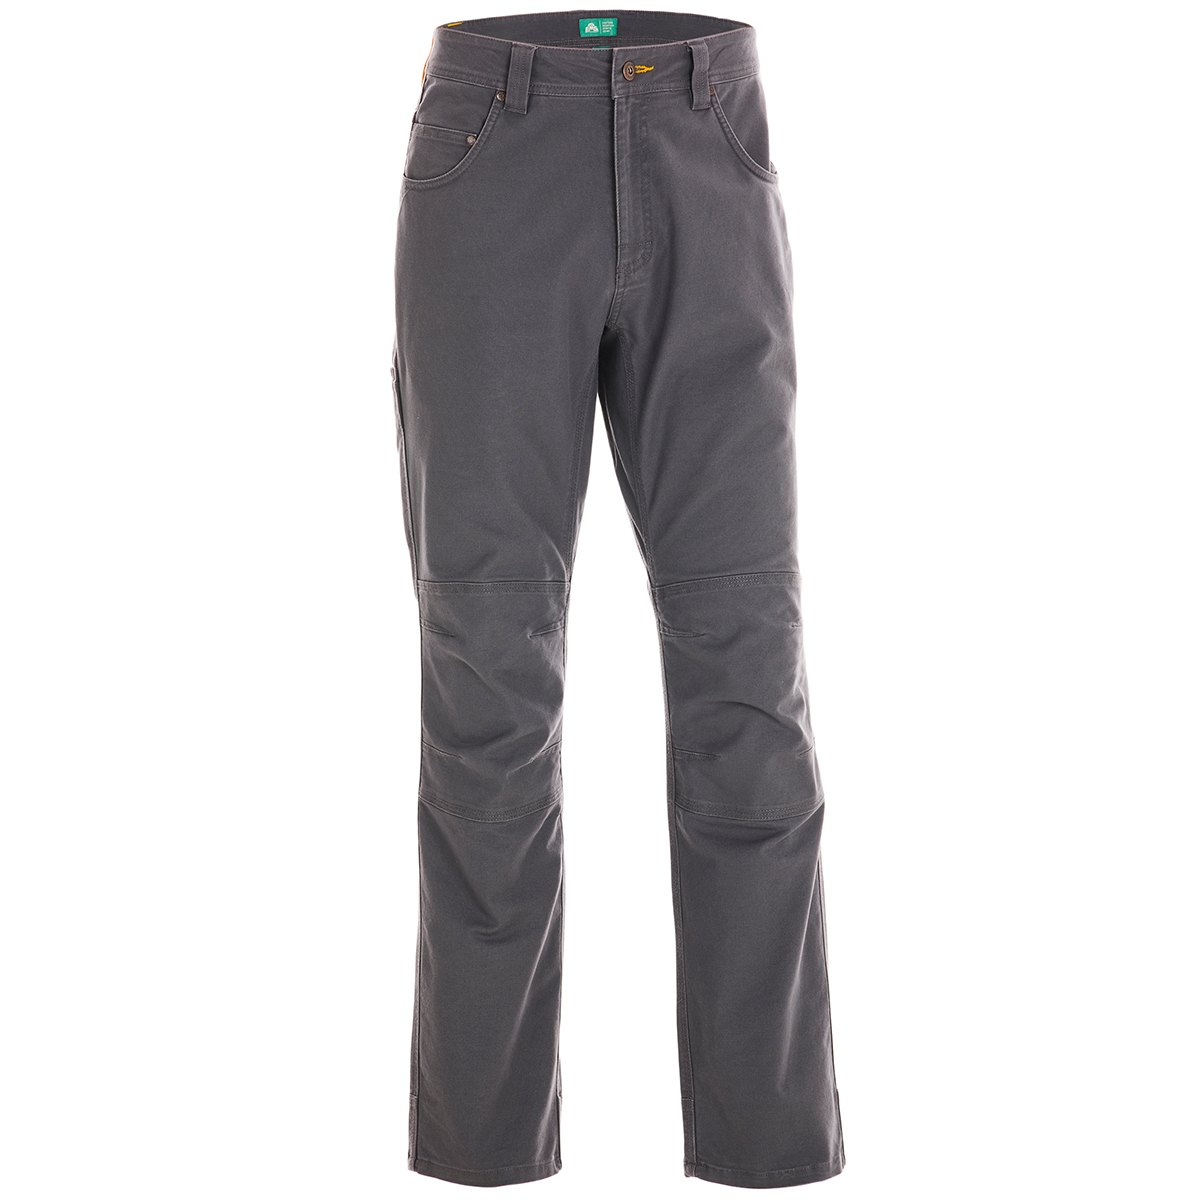 EMS Men's Fencemender Rebar Pants - Size 32/32